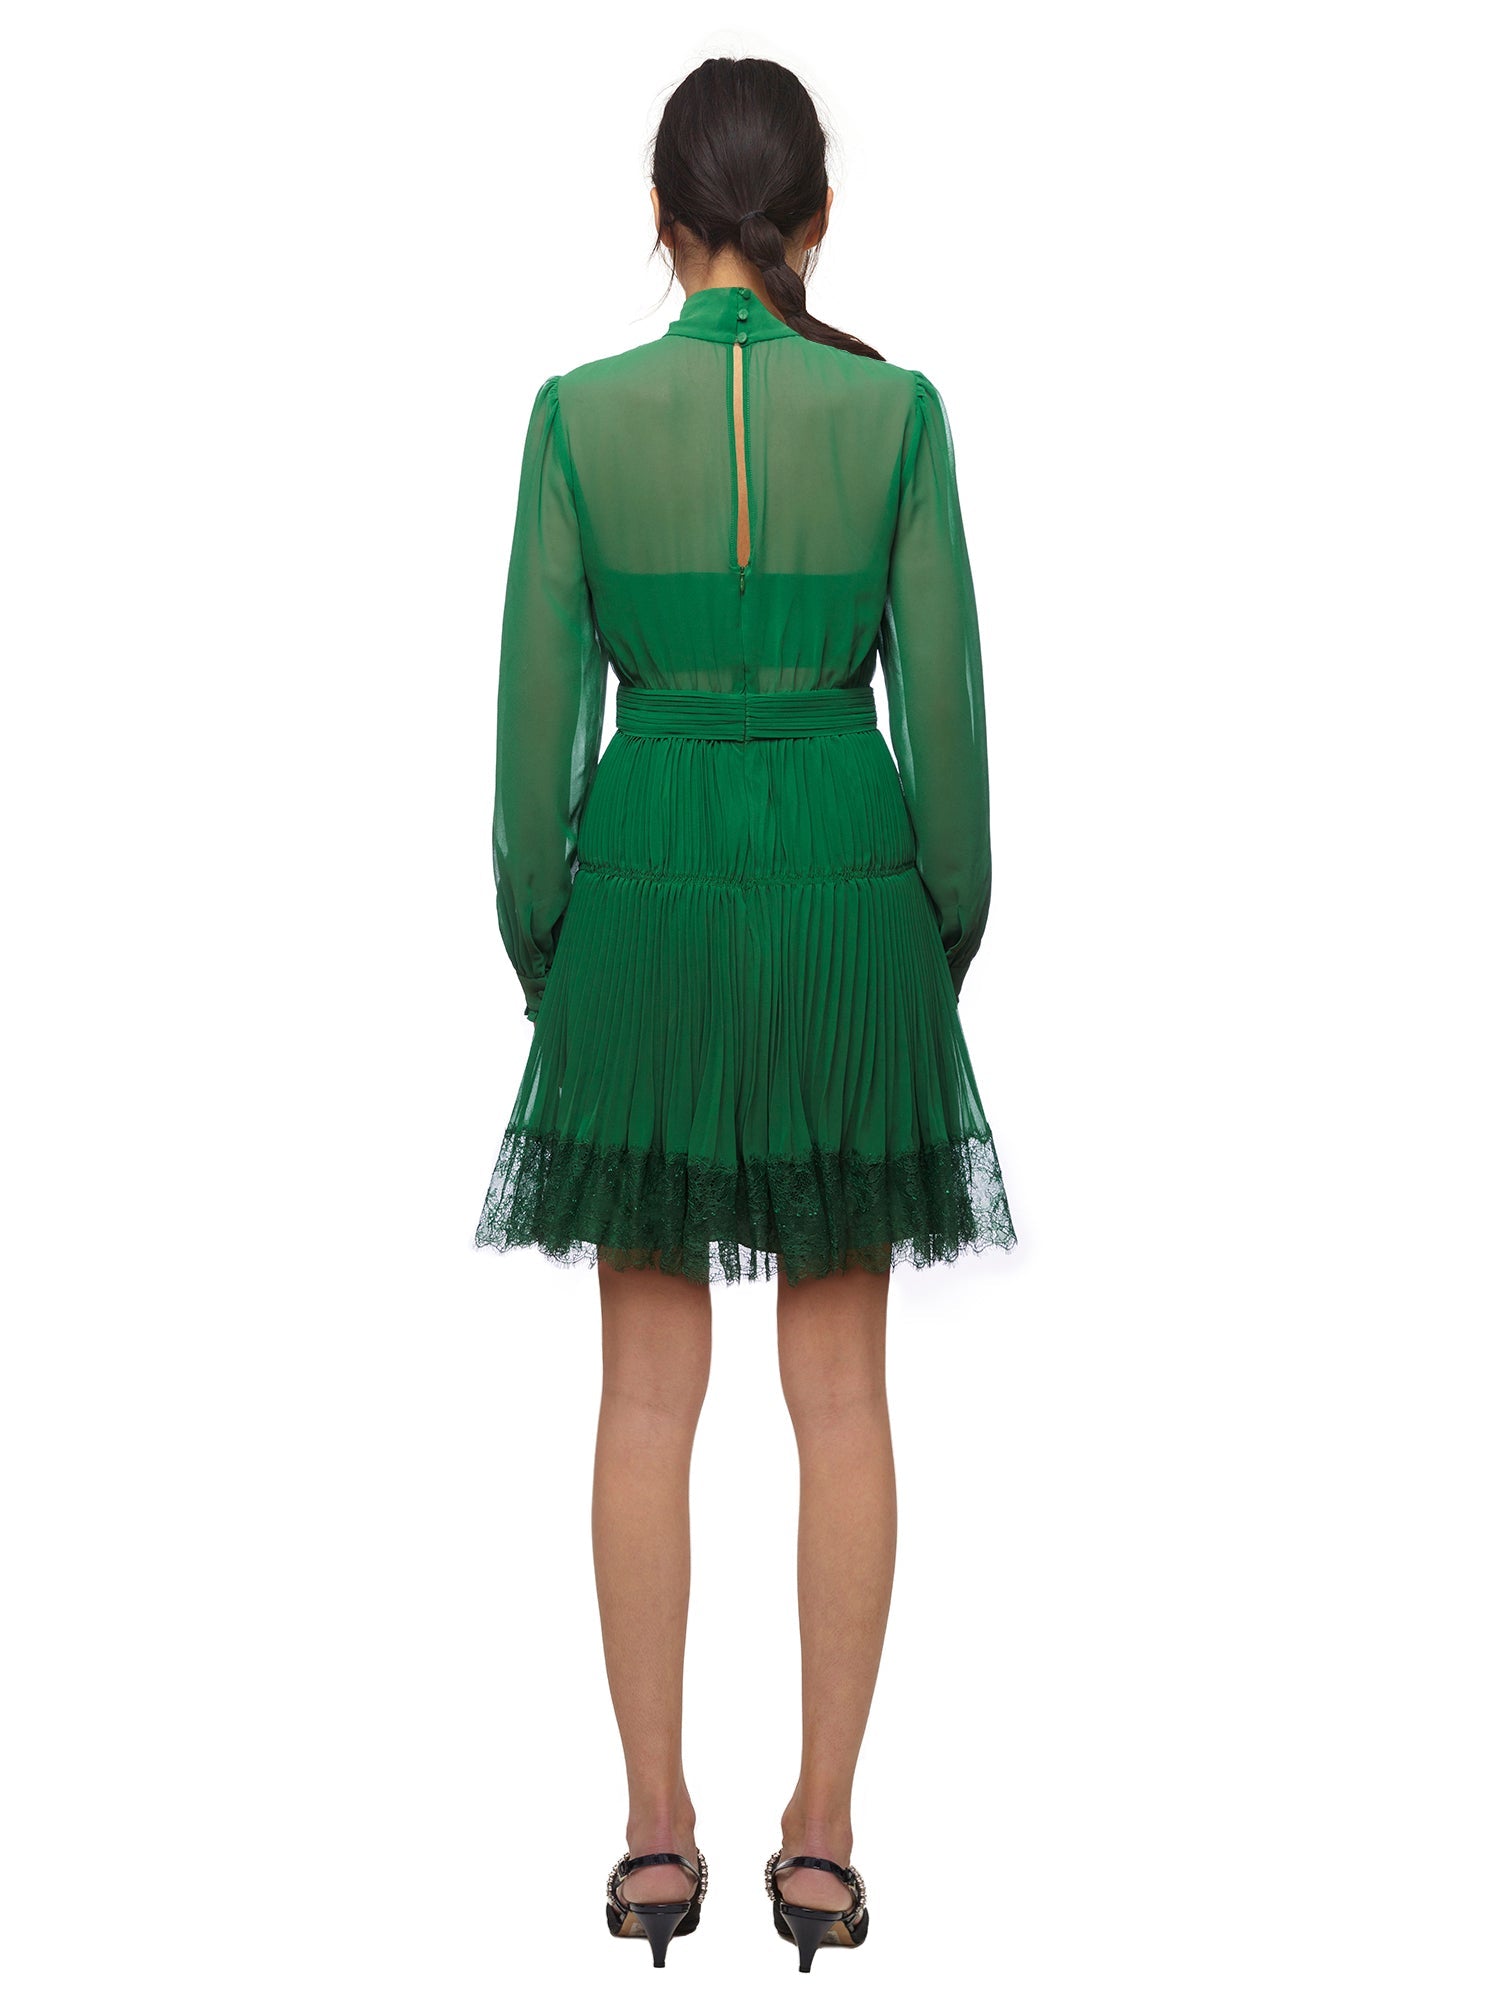 A woman wearing the Green Chiffon Mini Dress